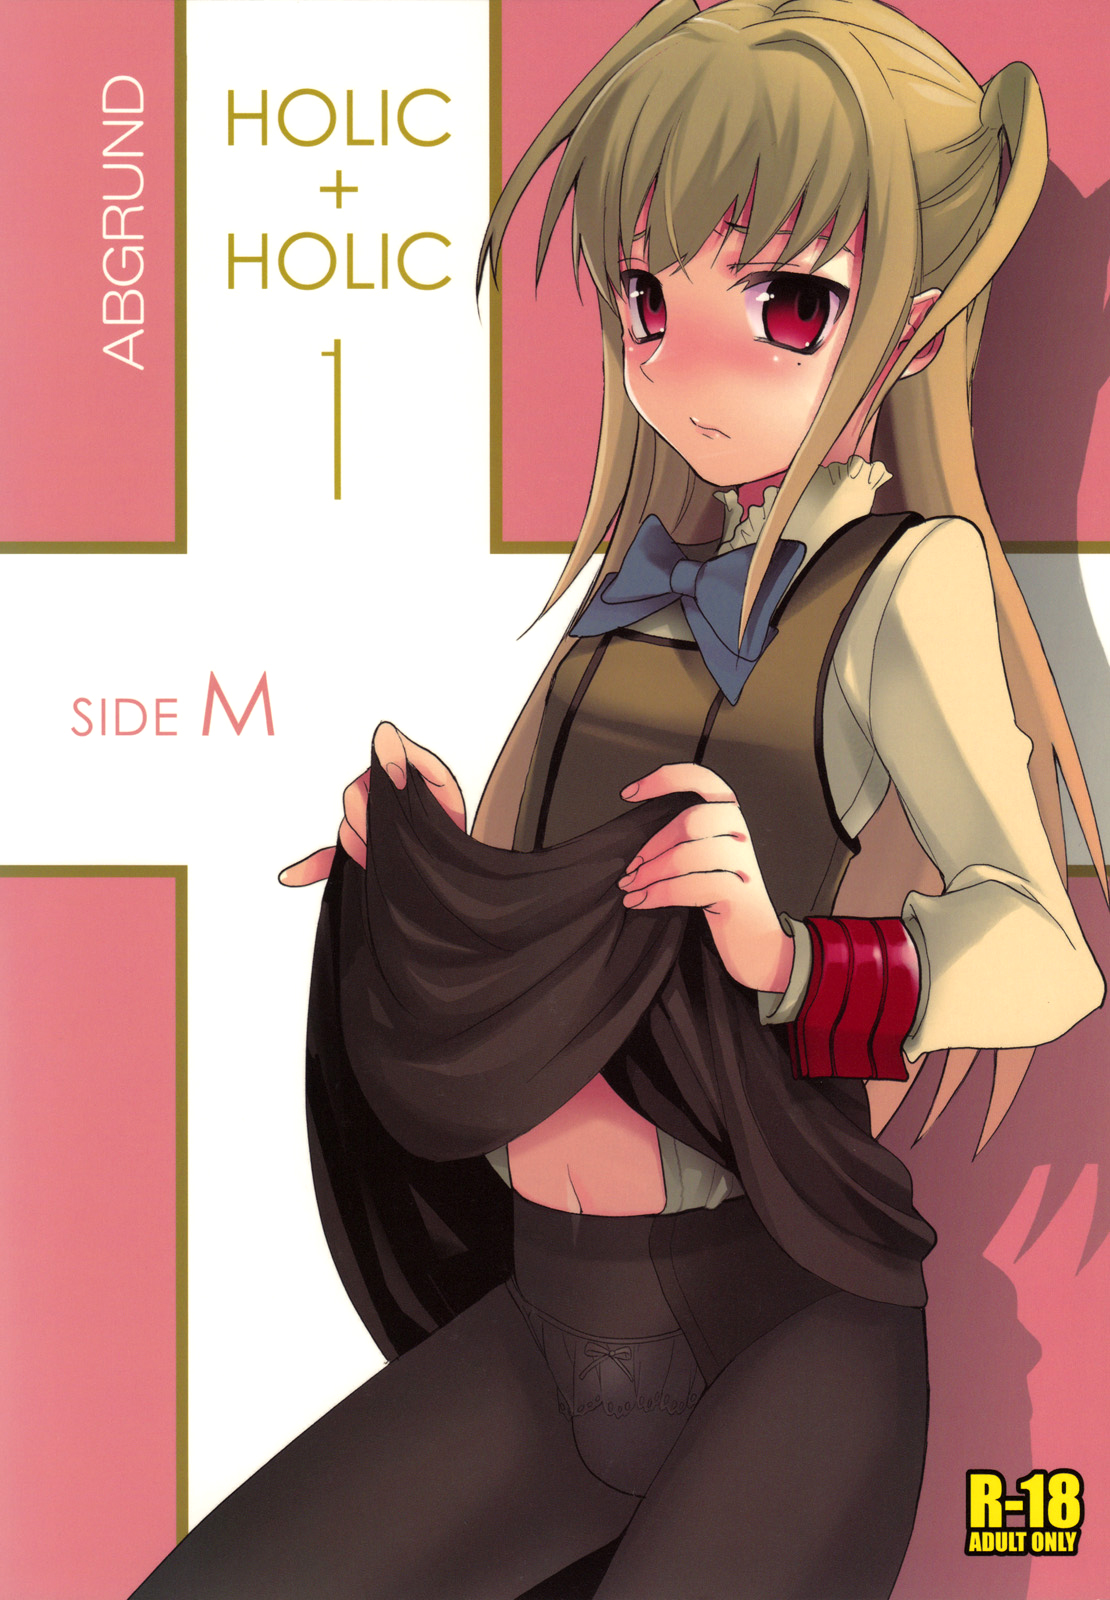 Xxx Hot Holic - Holic + Holic | Comics XXX | Mangas y doujin hentai en EspaÃ±ol